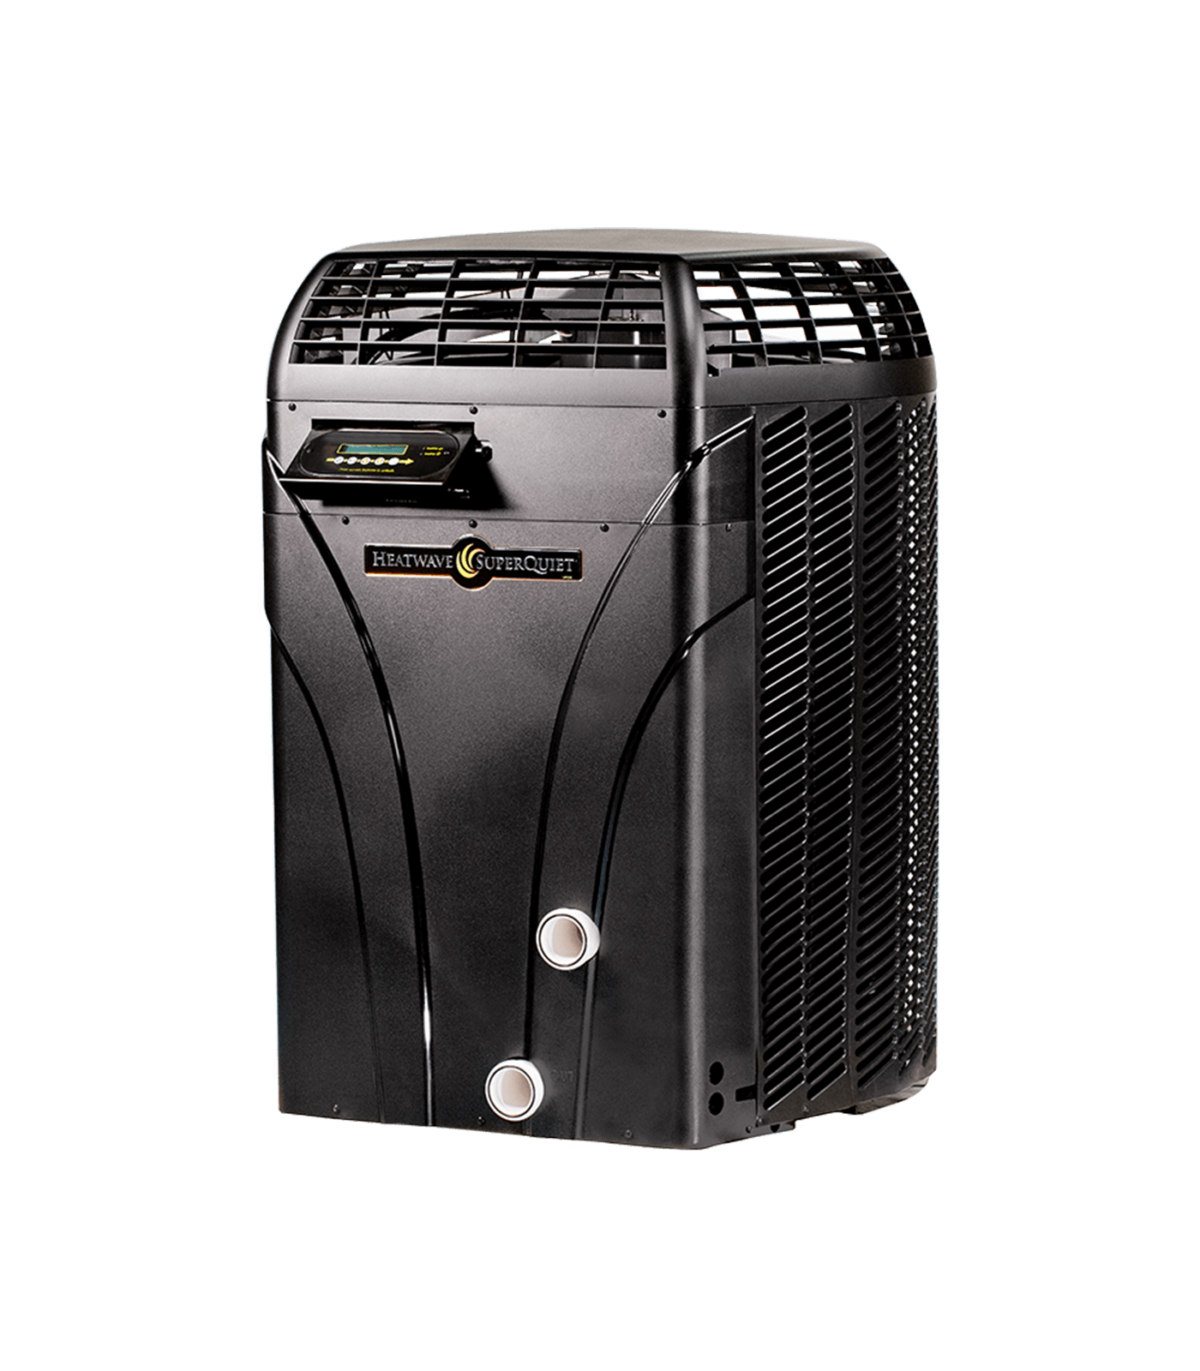 HeatWave SuperQuiet SQ120R | Black colored heater machine | Aquacal Heaters | Immerspa Fiberglass Inground Spas, Hot Tubs & Pools